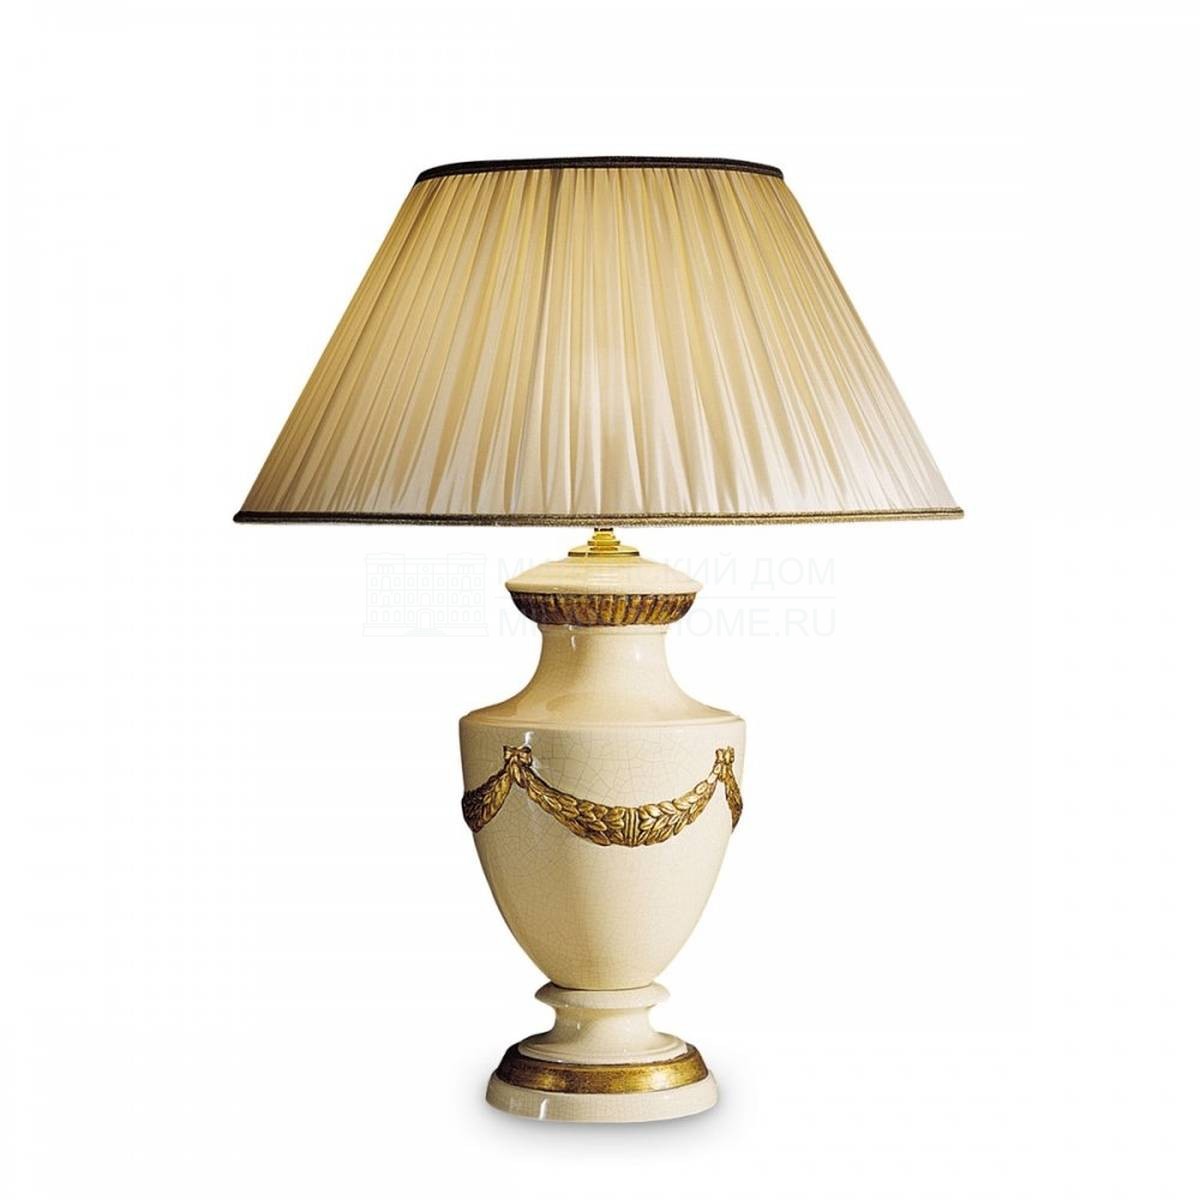 Настольная лампа Venice table lamp из Италии фабрики MARIONI